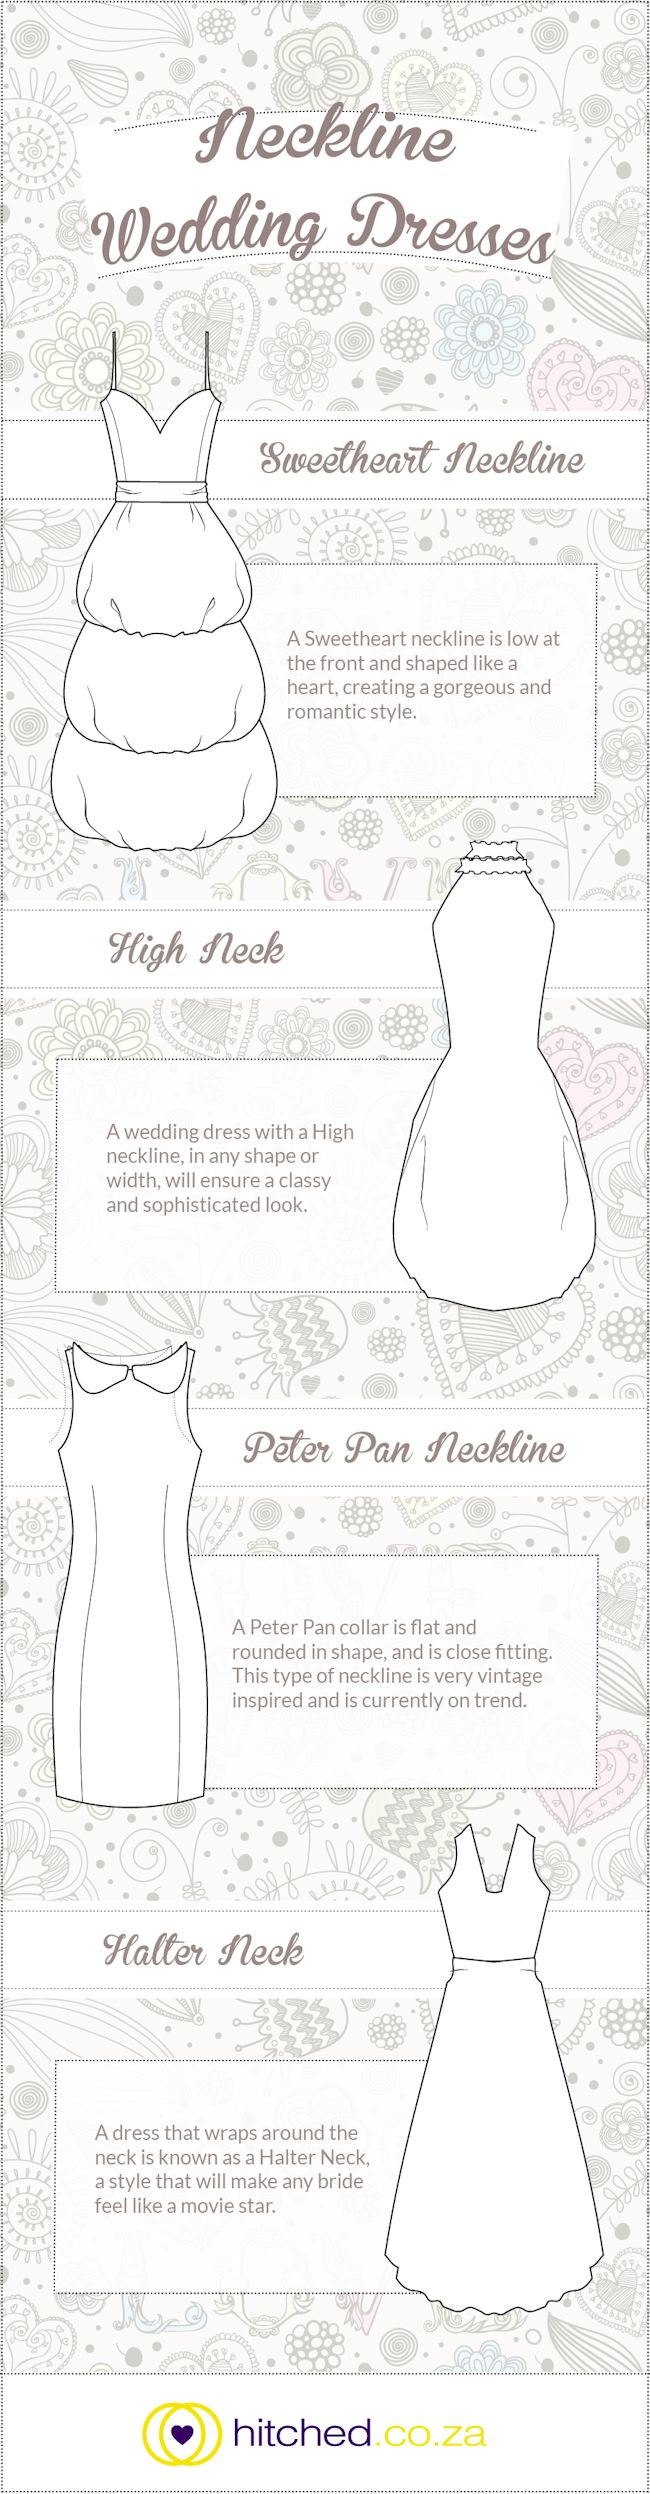 Neckline Wedding Dresses